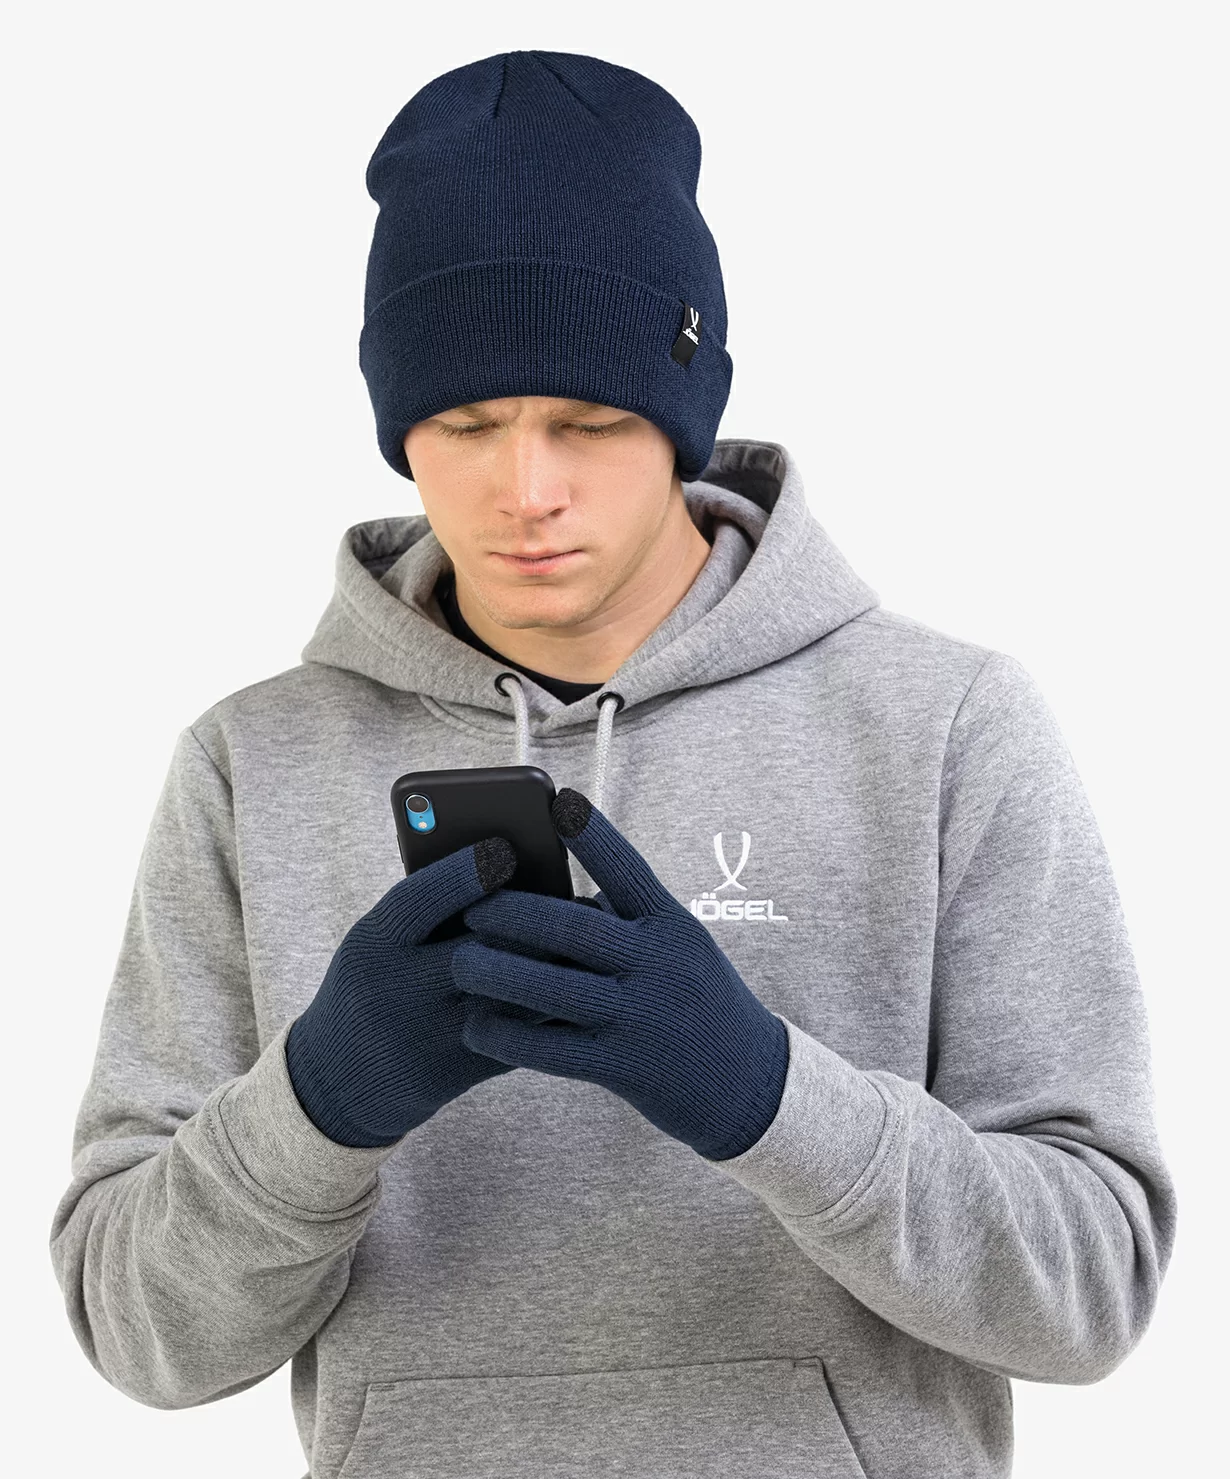 Реальное фото Перчатки зимние ESSENTIAL Touch Gloves, темно-синий от магазина СпортСЕ